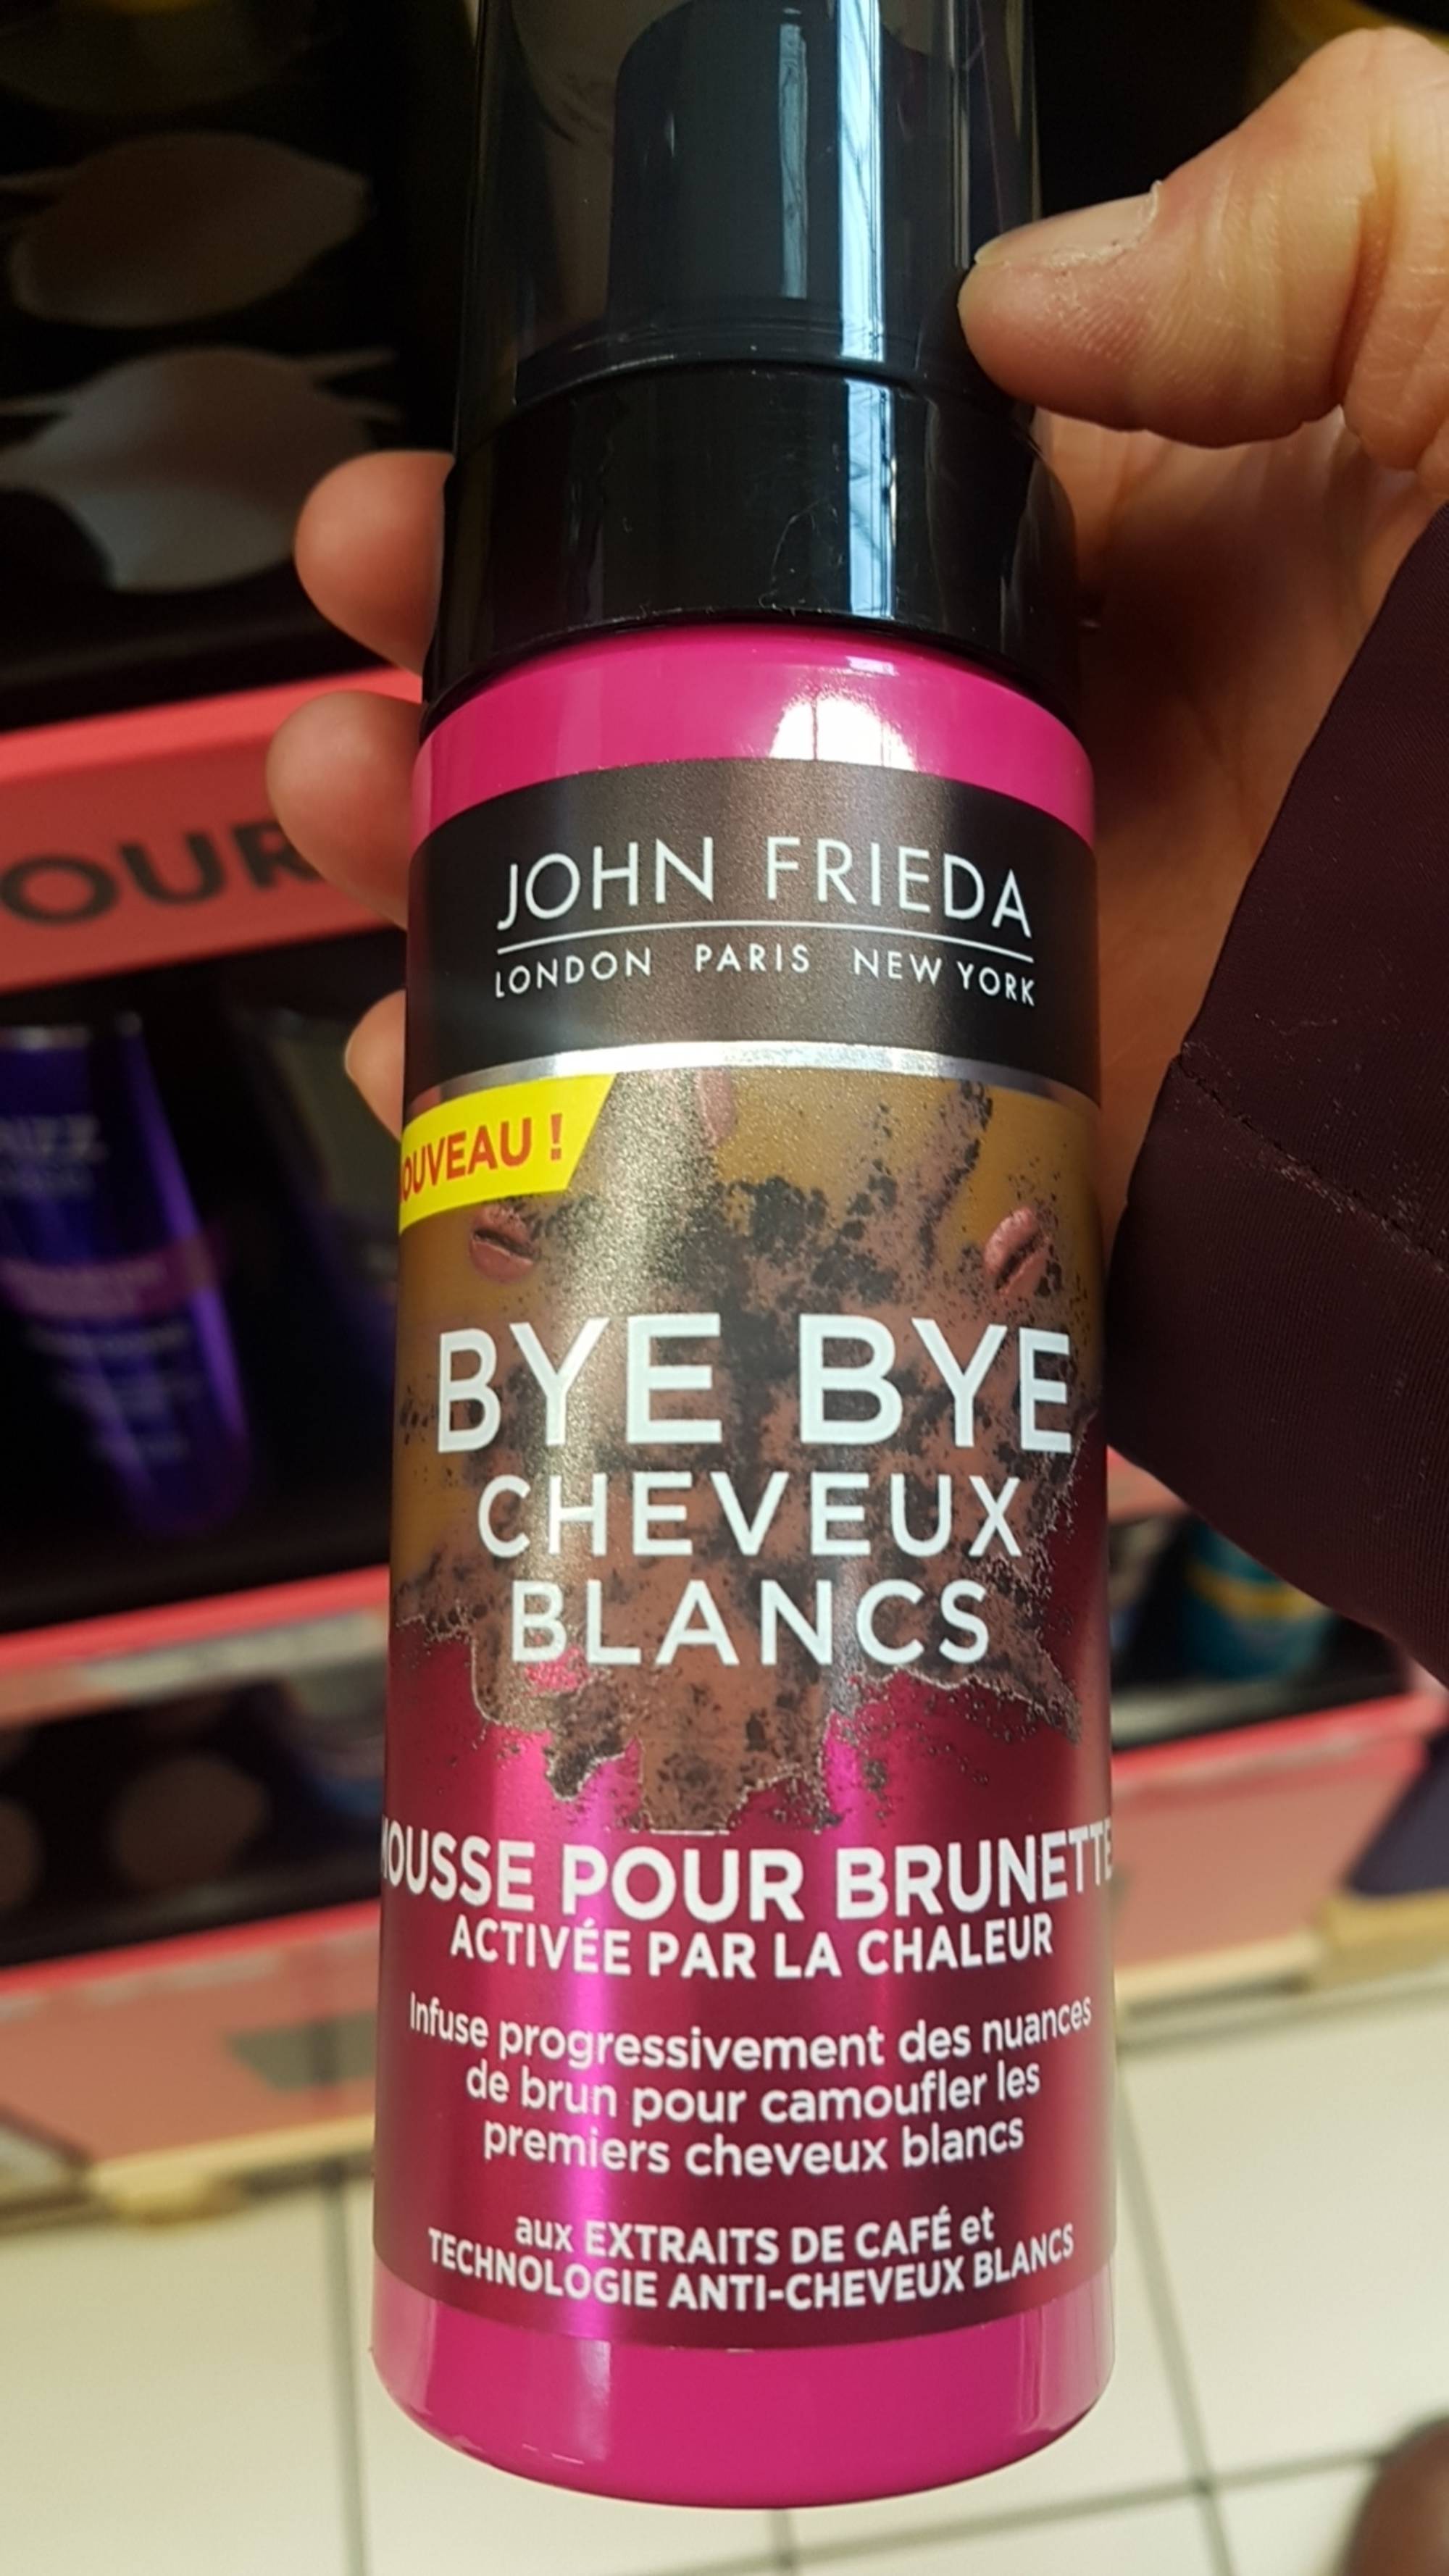 JOHN FRIEDA - Bey bye cheveux blancs - Mousse pour brunette